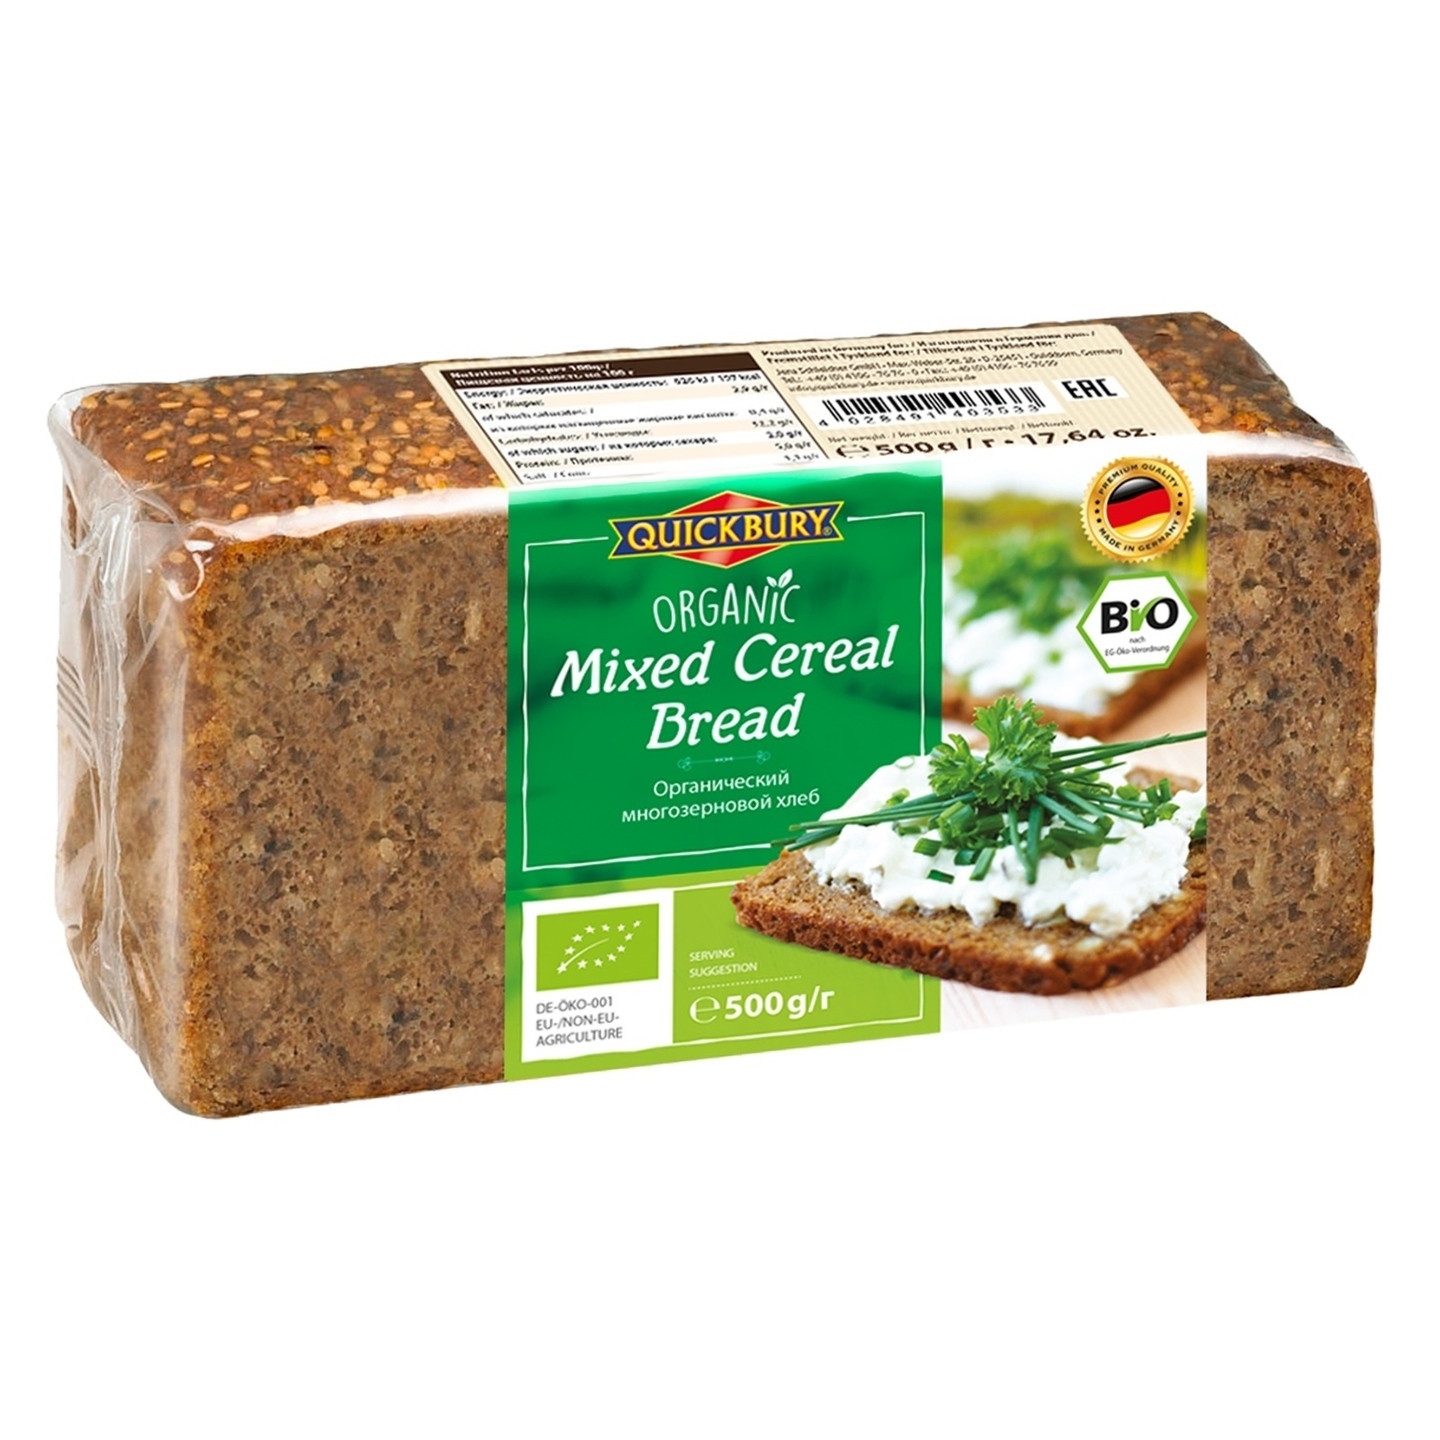 Quickbury Organic Mixed Cereal Bread